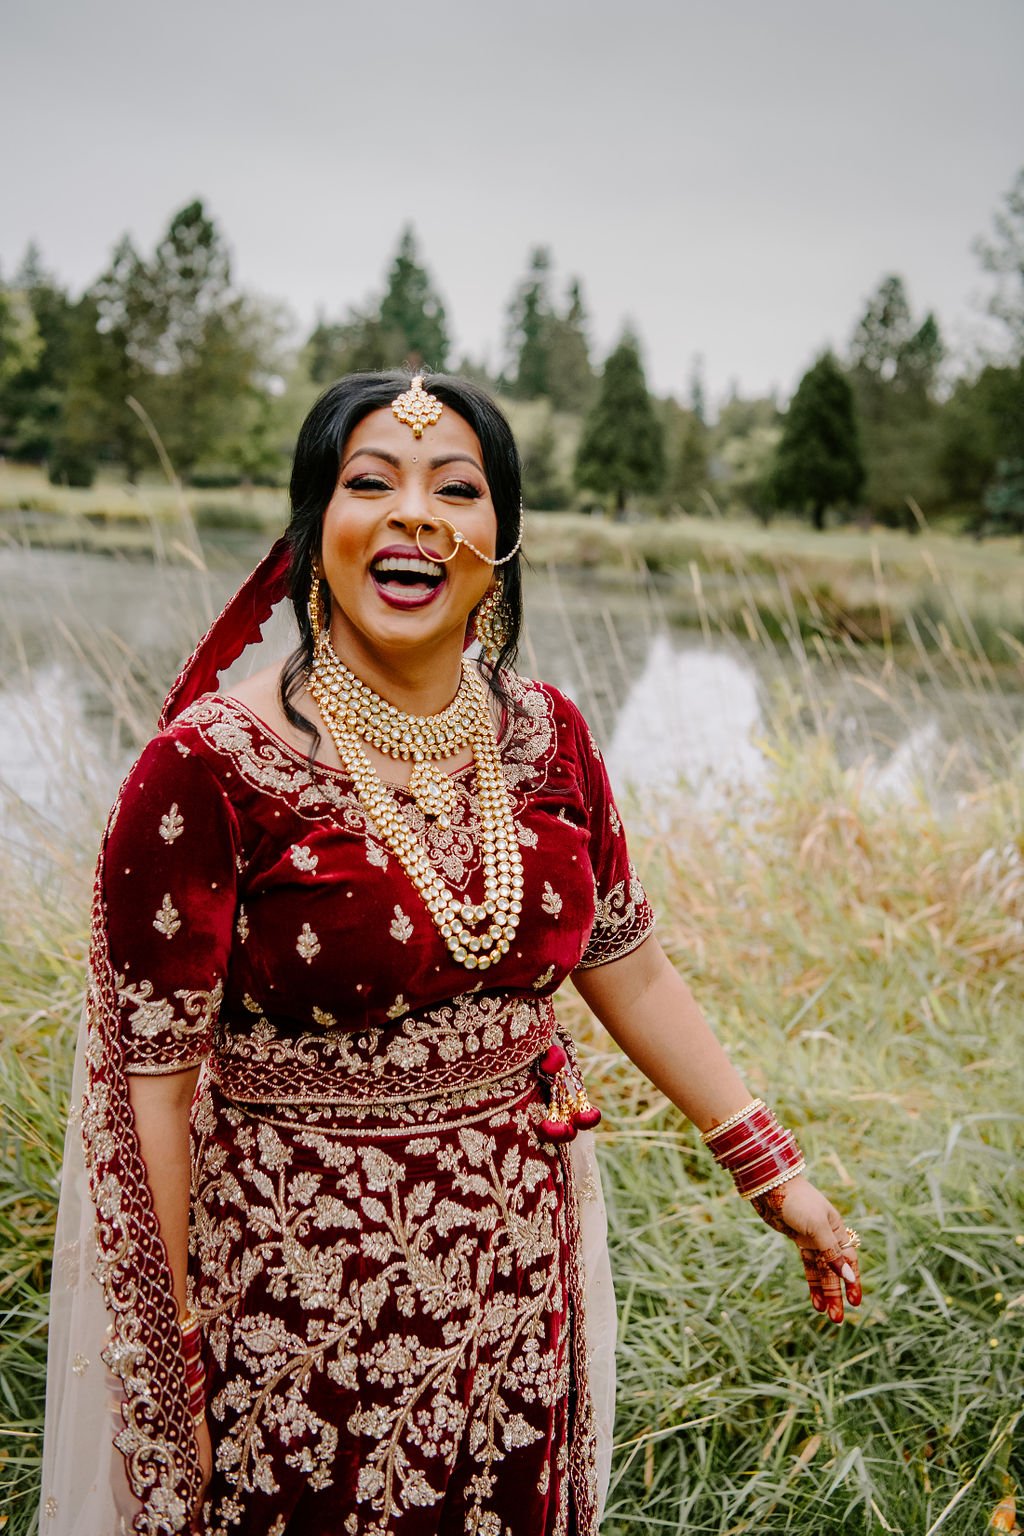 Jasika_Amar_Wedding_Portland_OR_Summer_2019_Muslim_Hindu_Oregon_Bride_Please_Credit_Talia_Jean_Photo-156.jpg